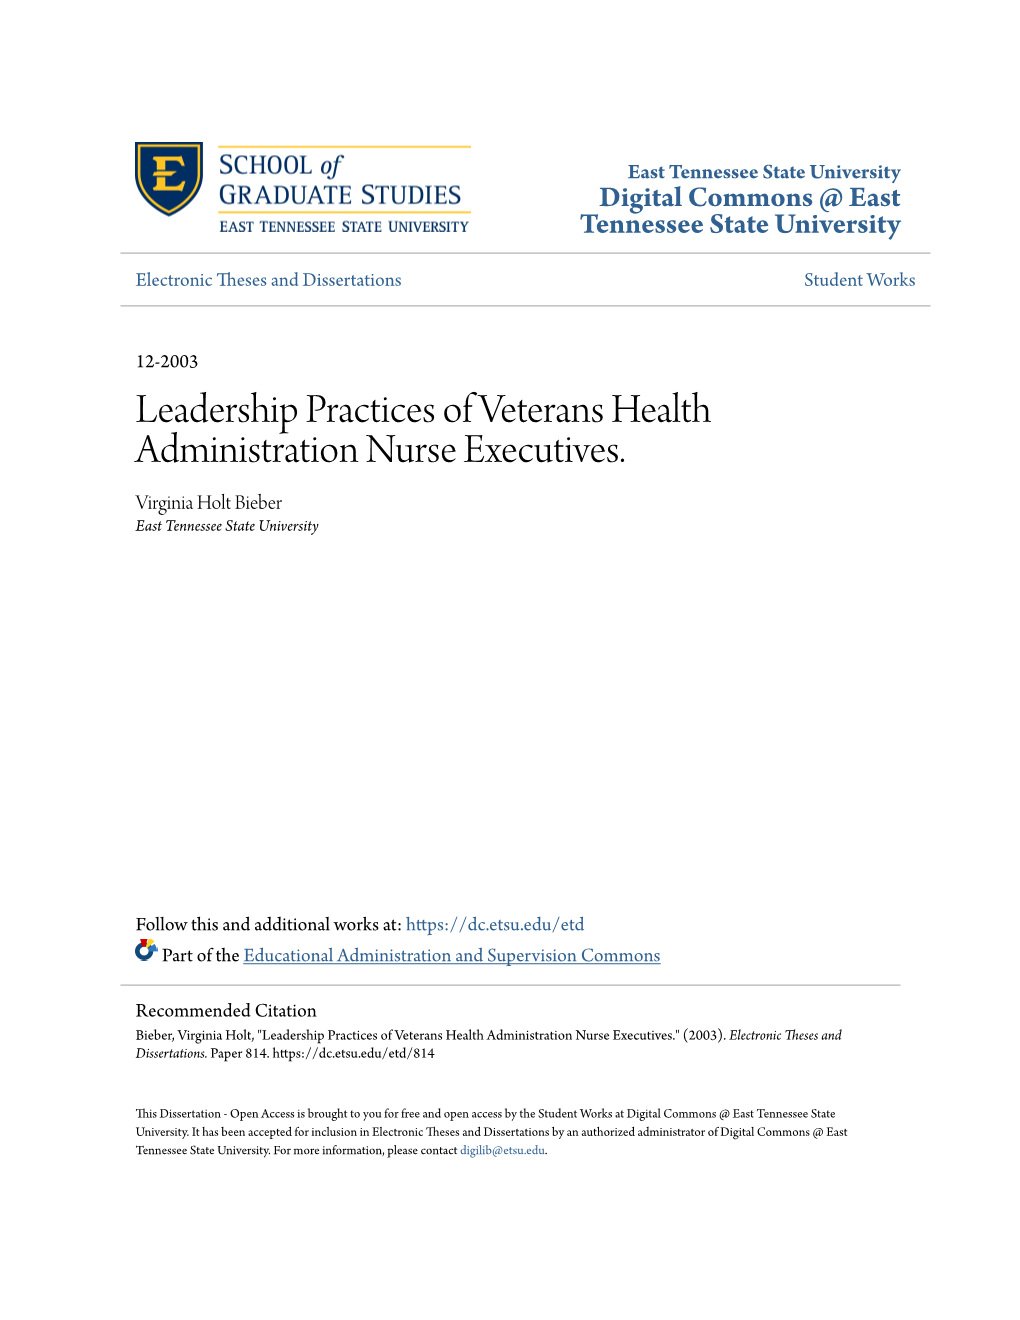 Leadership Practices of Veterans Health Administration Nurse Executives